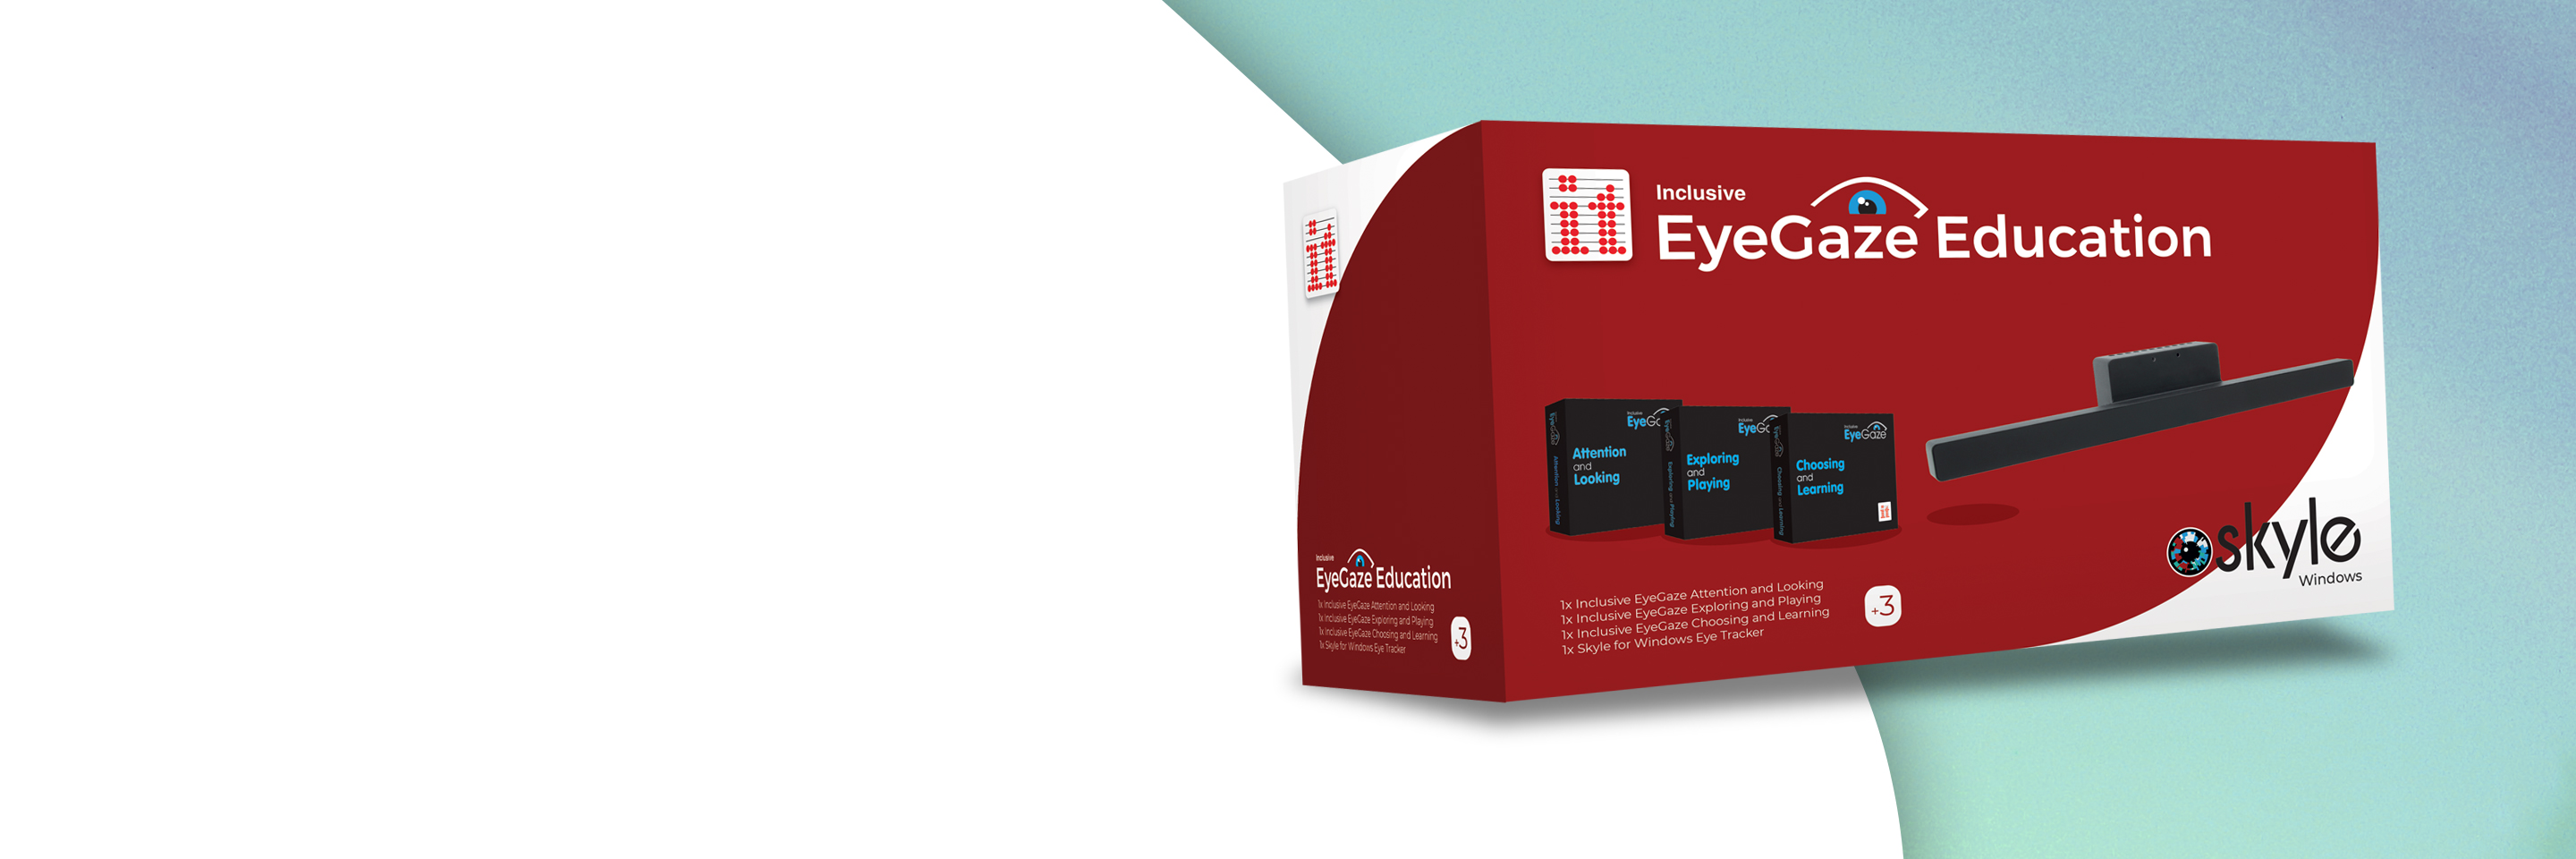 Inclusive EyeGaze Education: Skyle for Windows